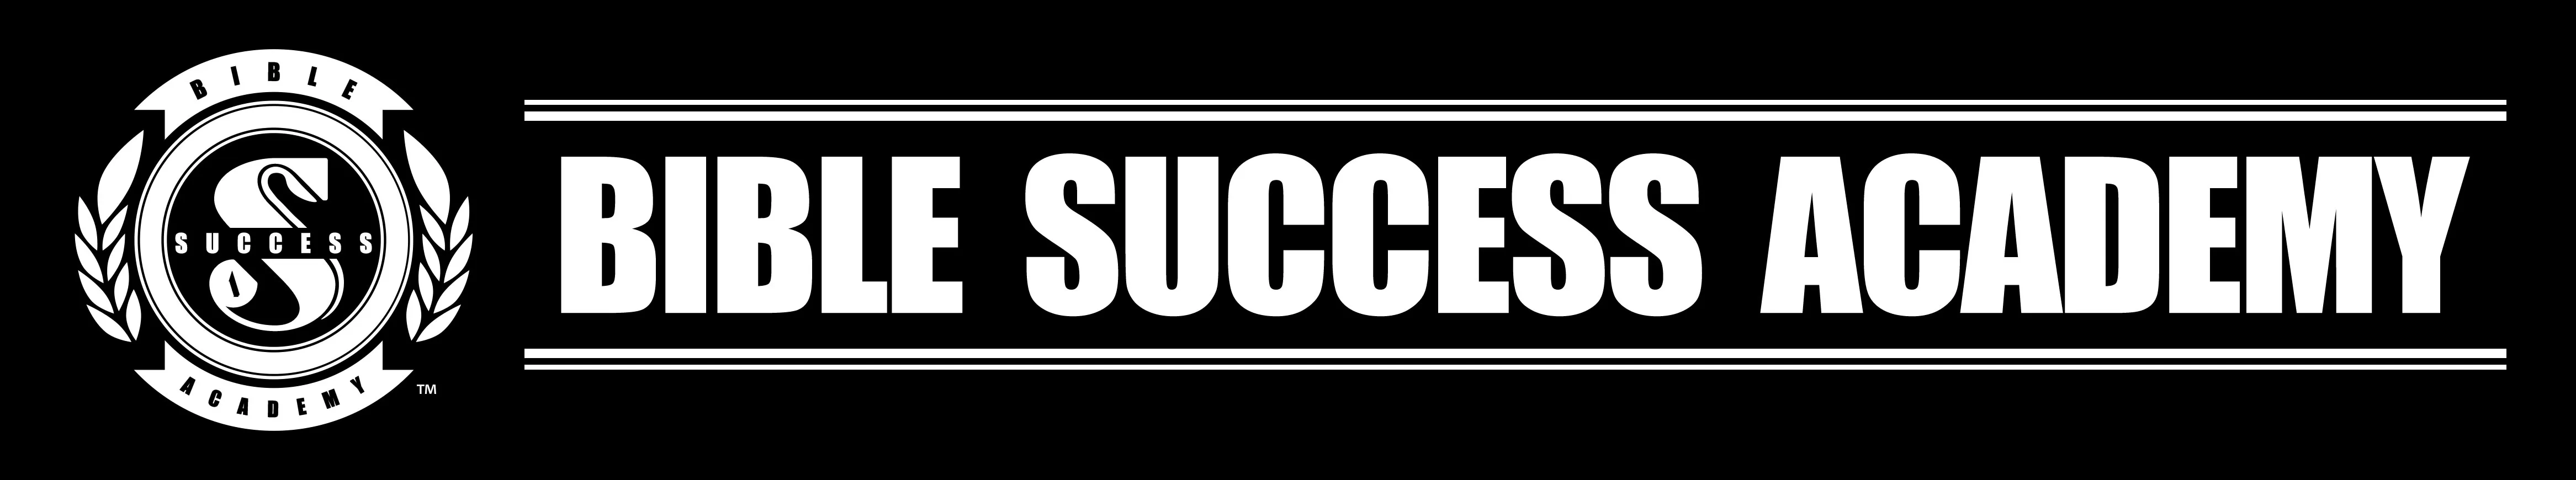 Bible Success Academy Logo